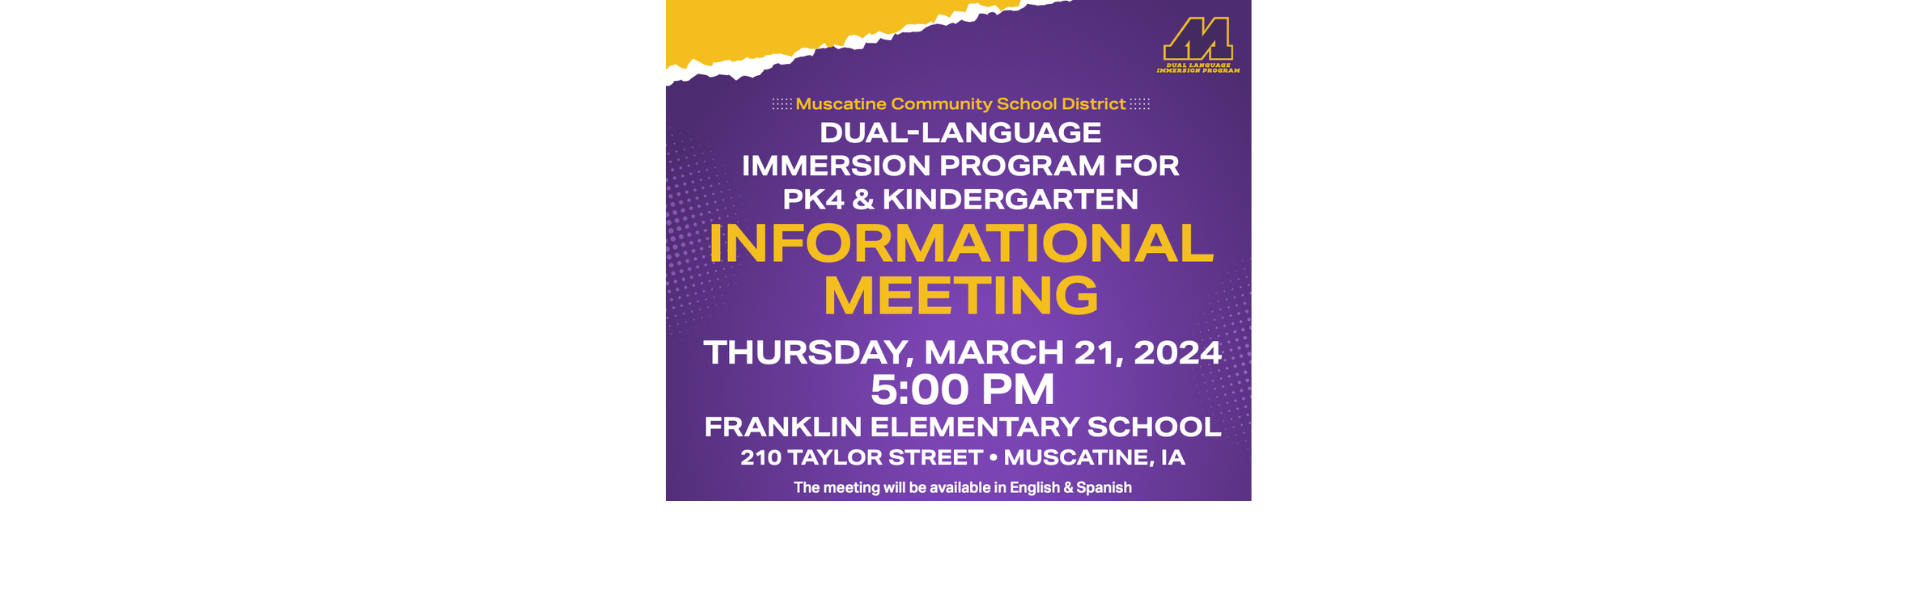 MCSD Dual-Language Program Meeting!